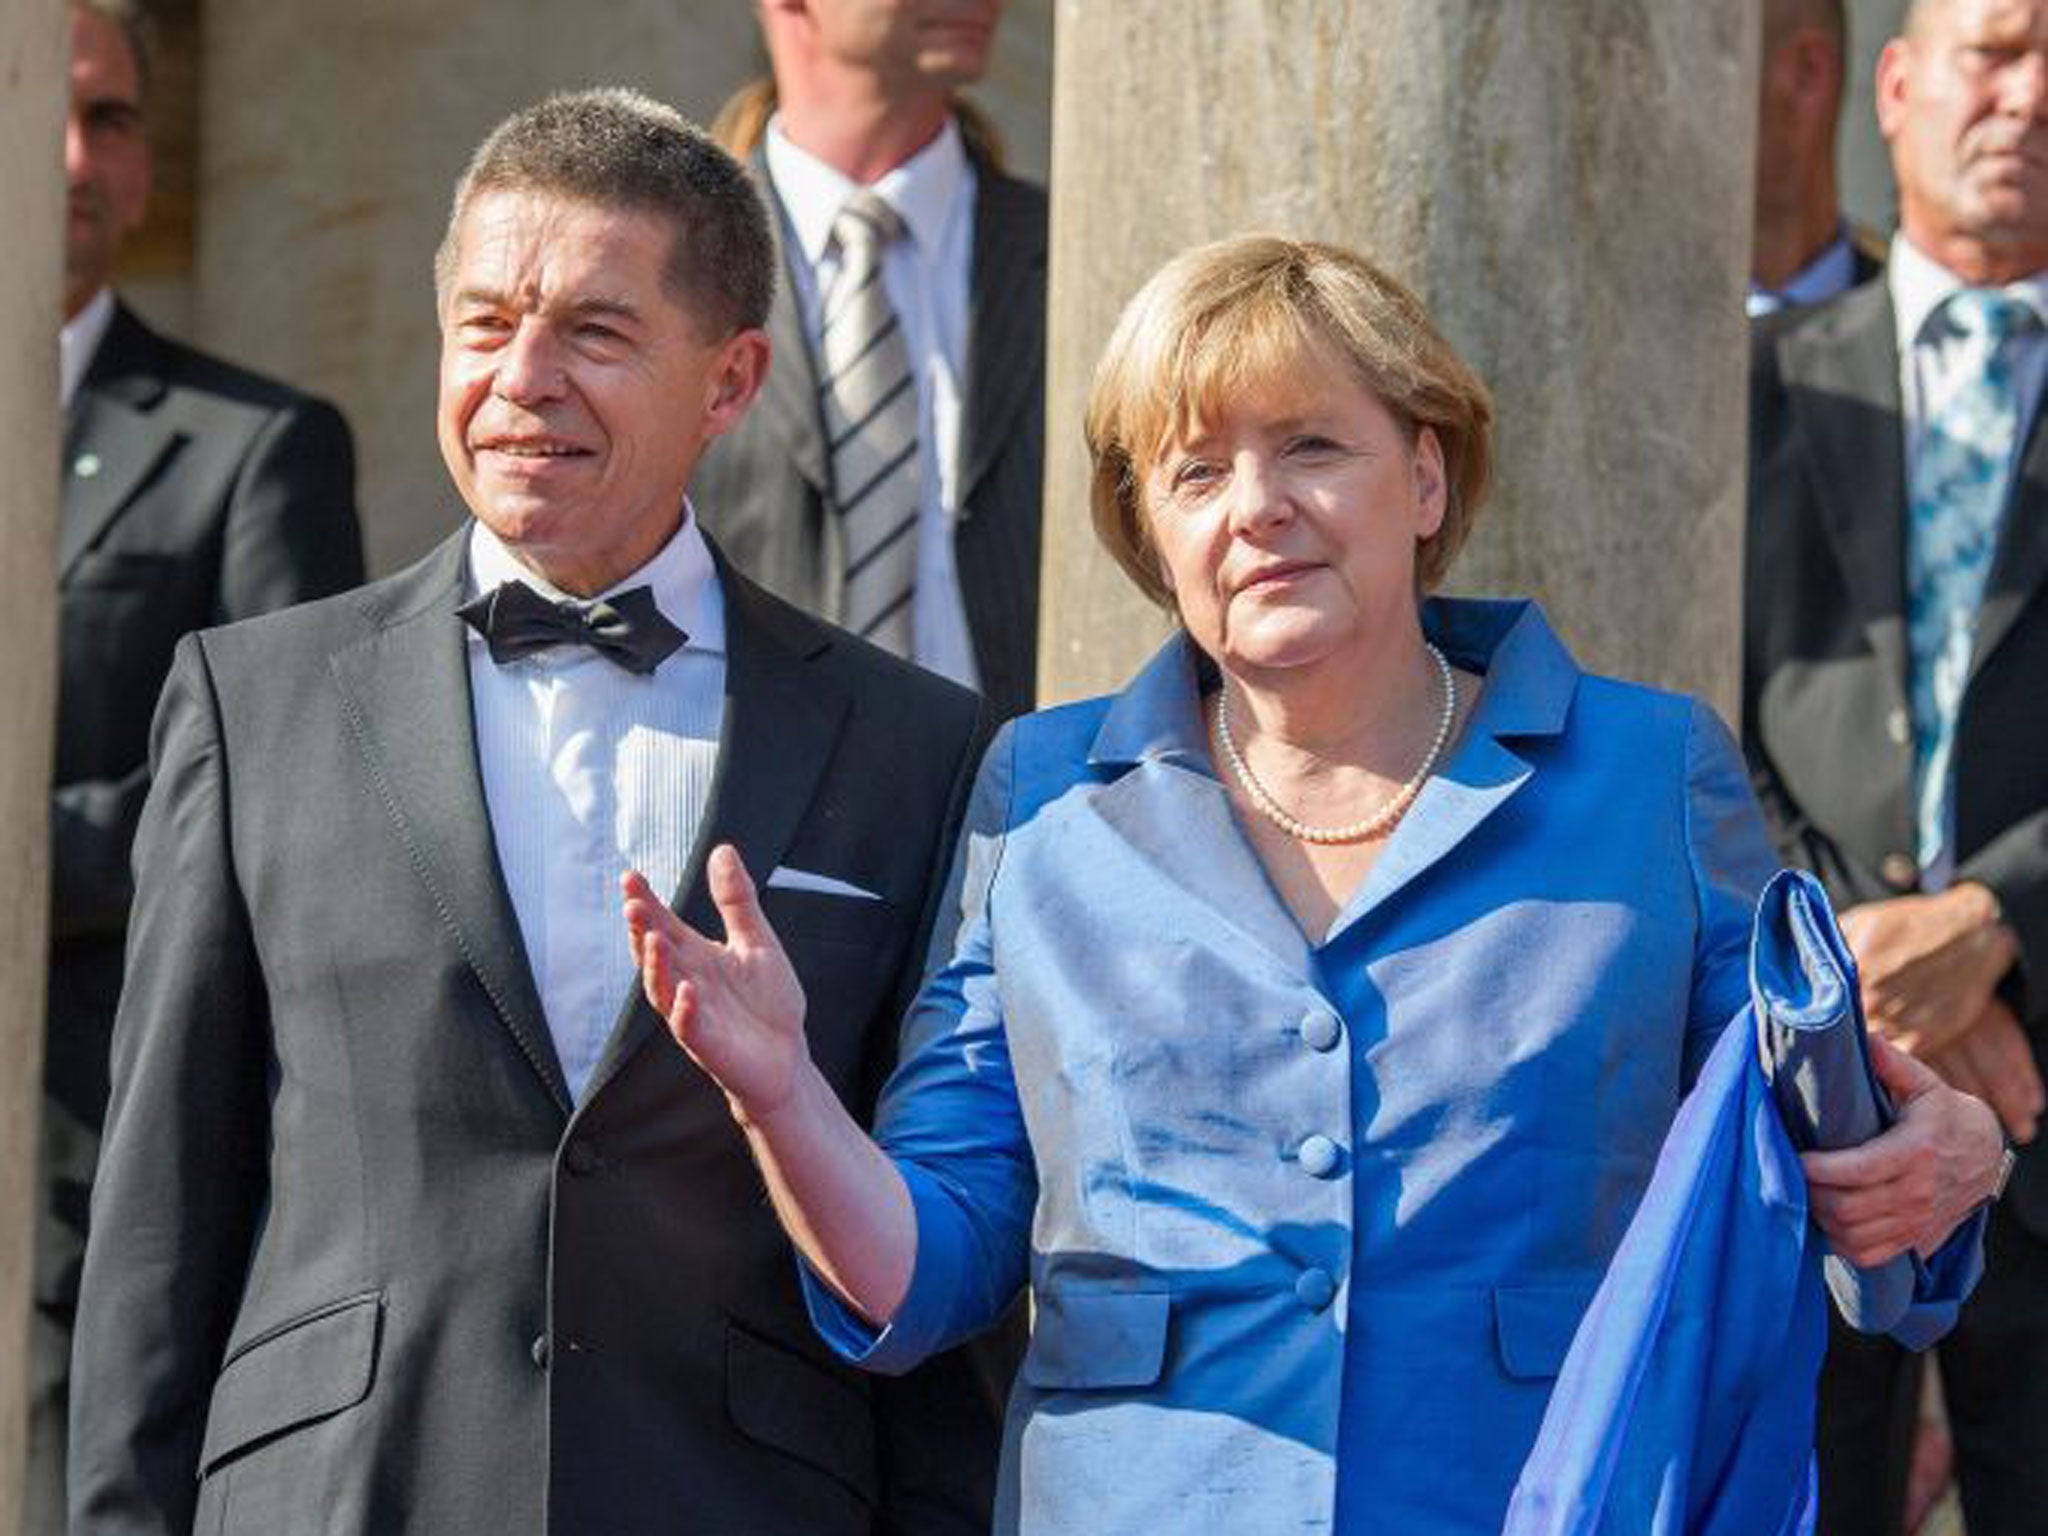 German Chancellor Angela Merkel pictured with her husband Joachim Sauer